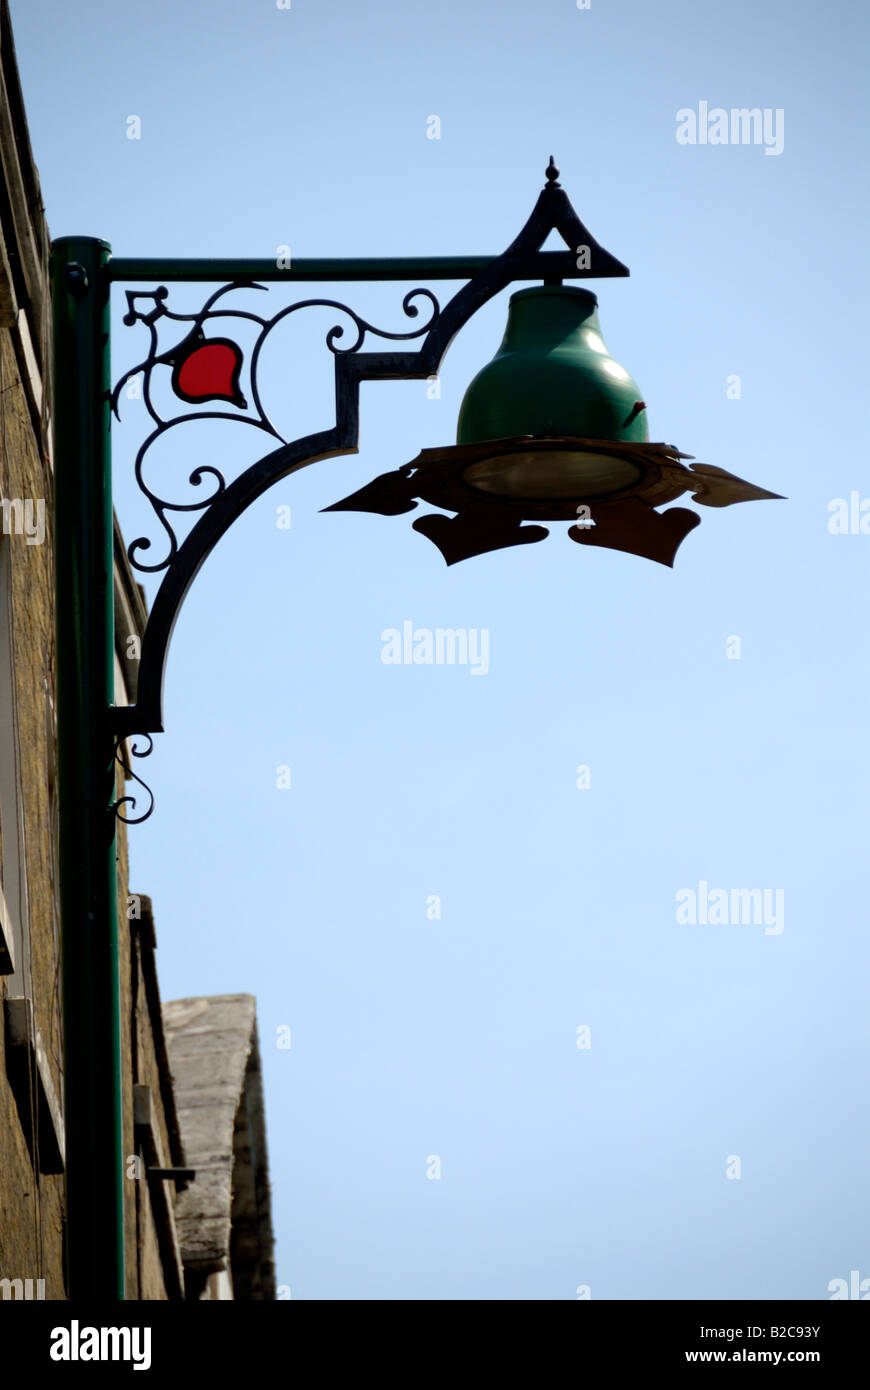 Brick Lane, Wall street lamp contre ciel bleu clair, Londres Banque D'Images